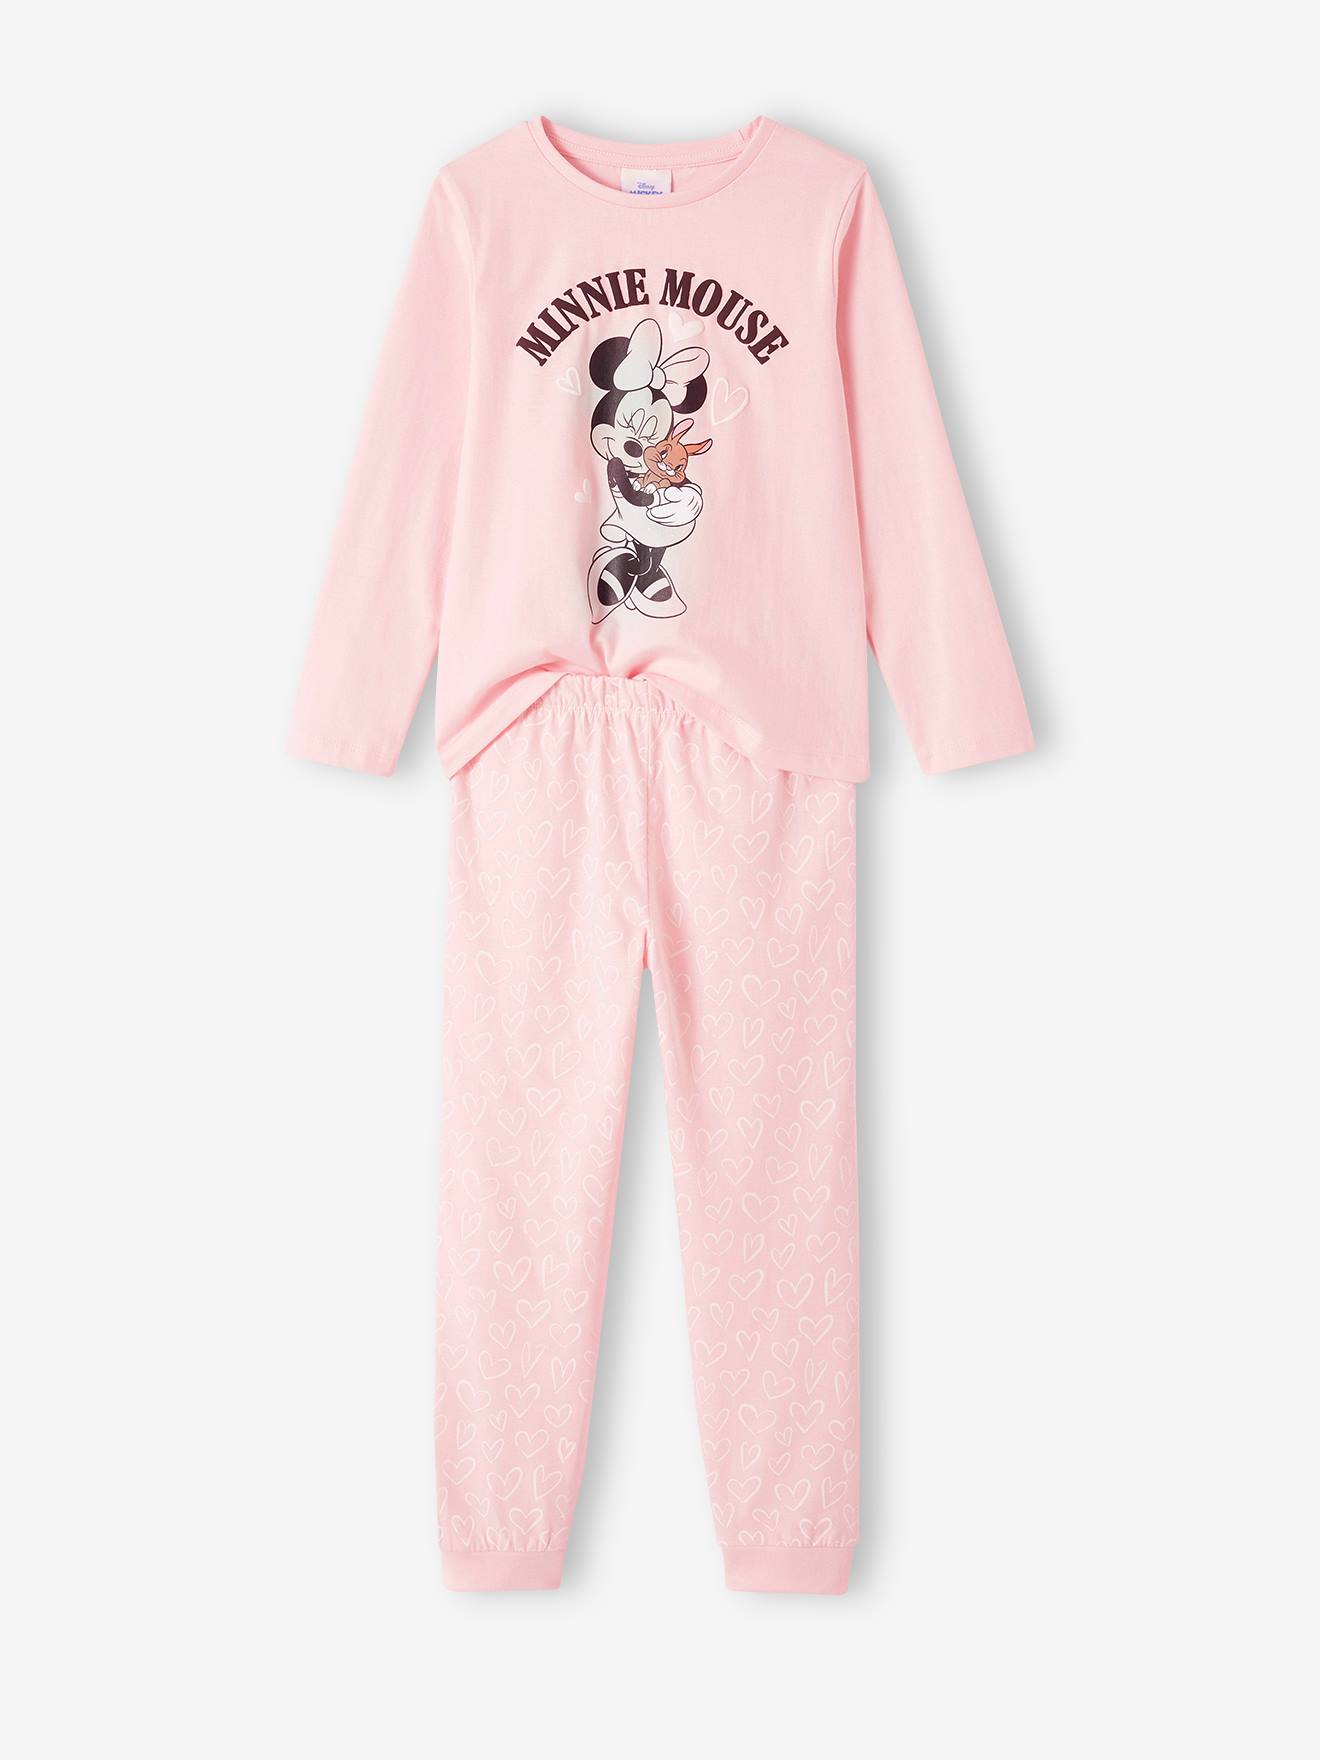 Disney(r) Minnie Mouse Pyjamas for Girls pale pink